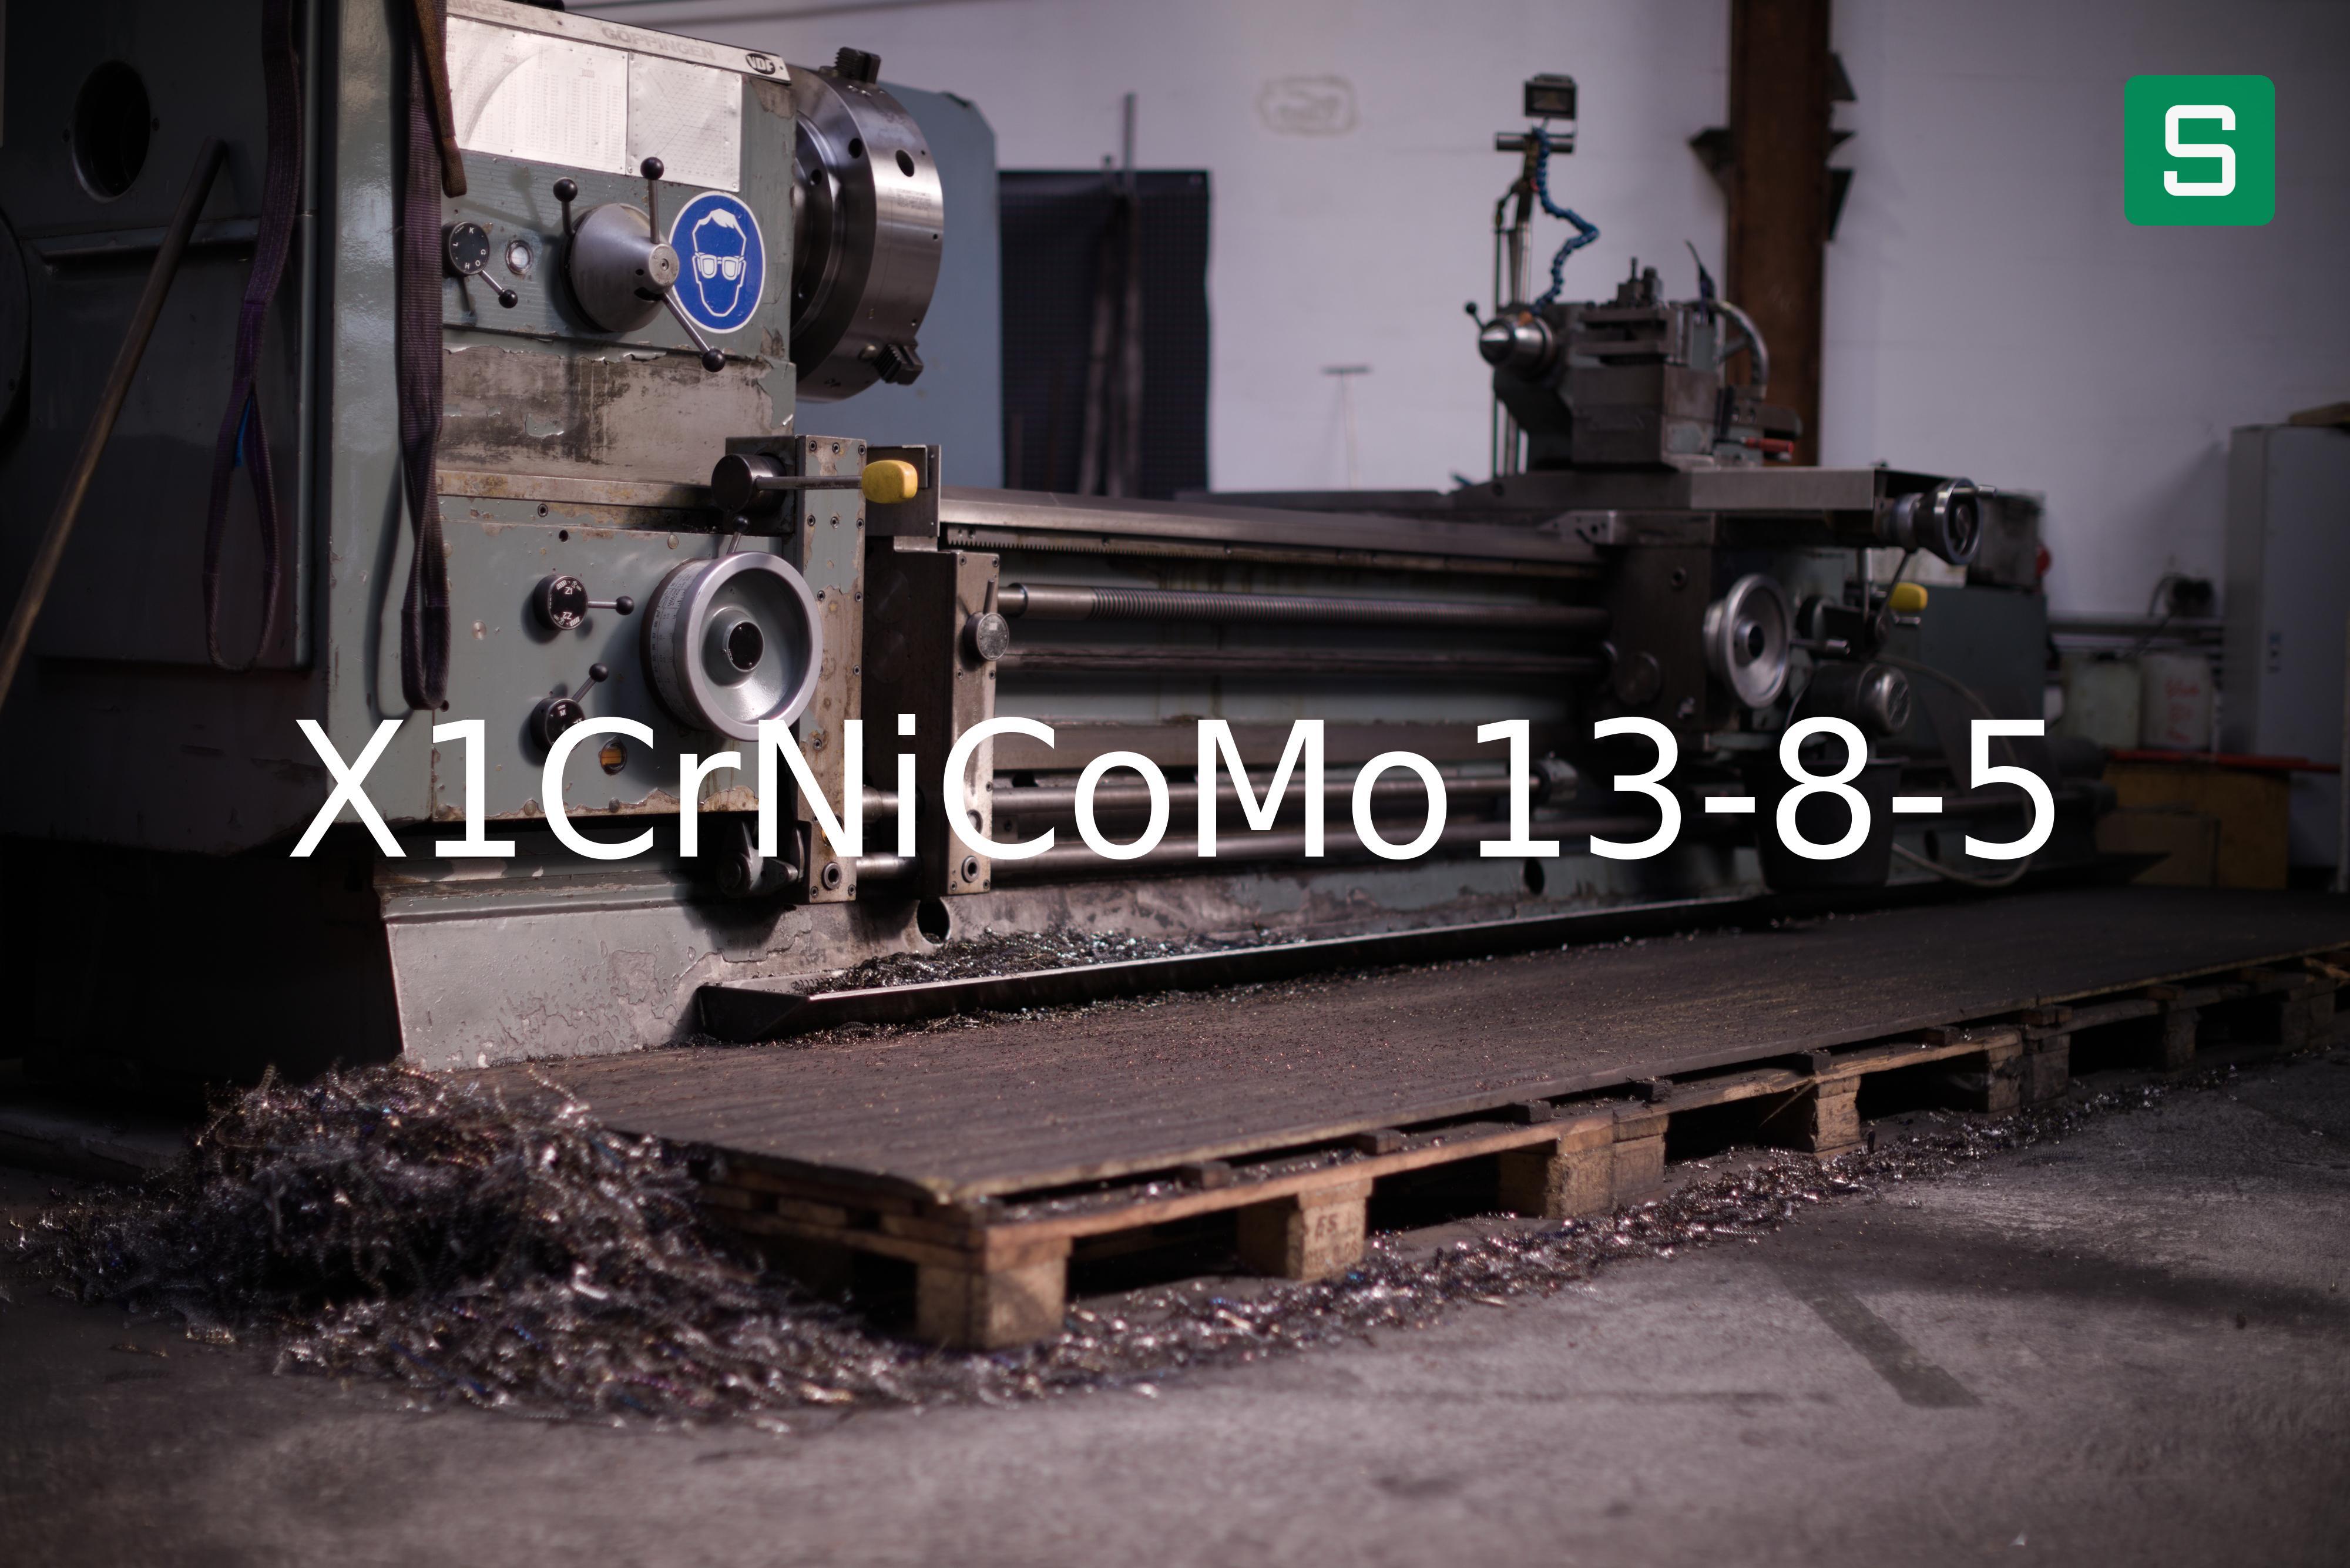 Steel Material: X1CrNiCoMo13-8-5